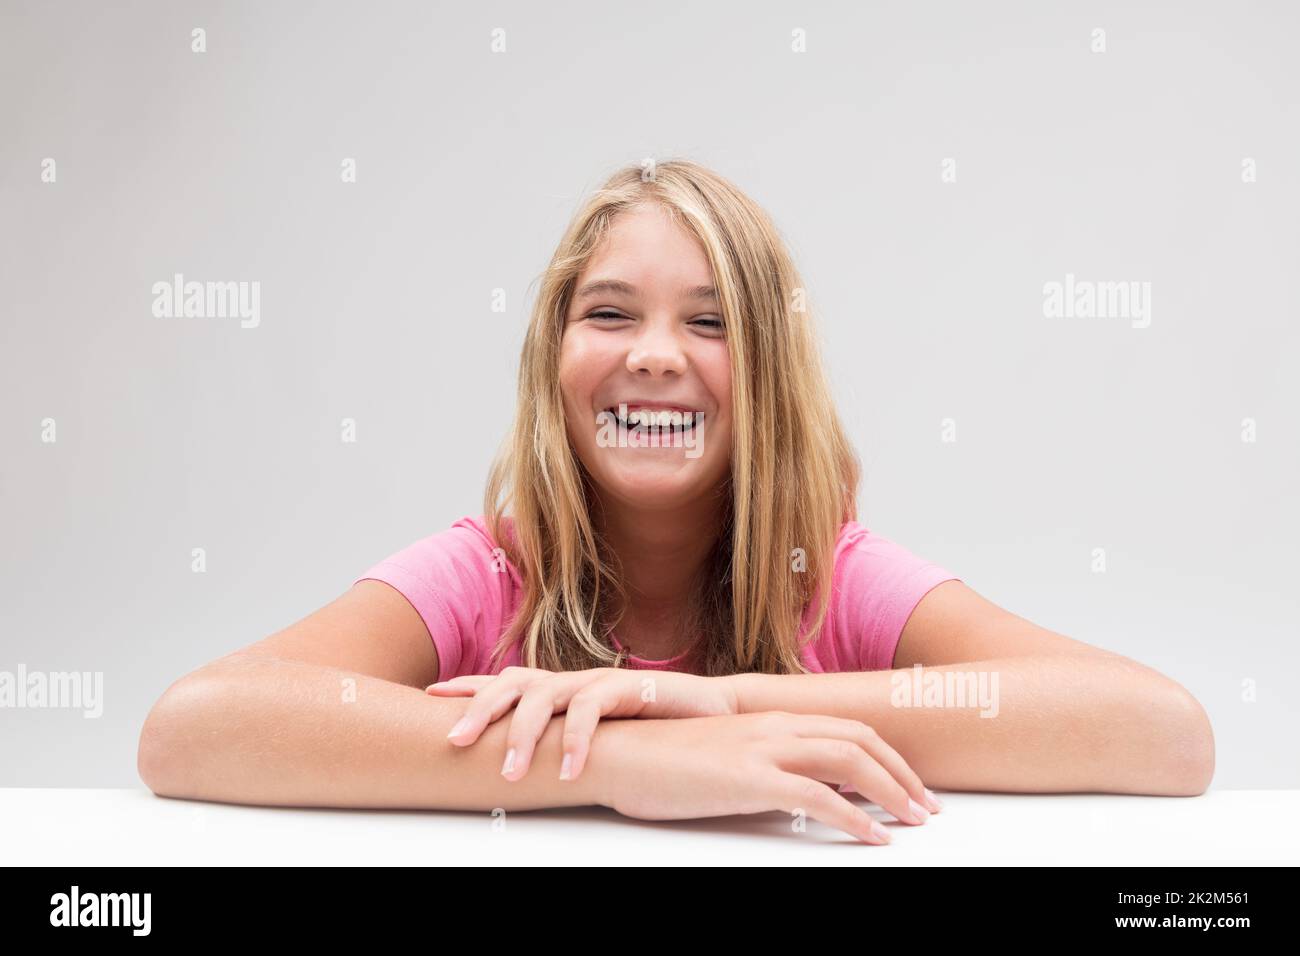 laughter explosion little girl portrait Stock Photo